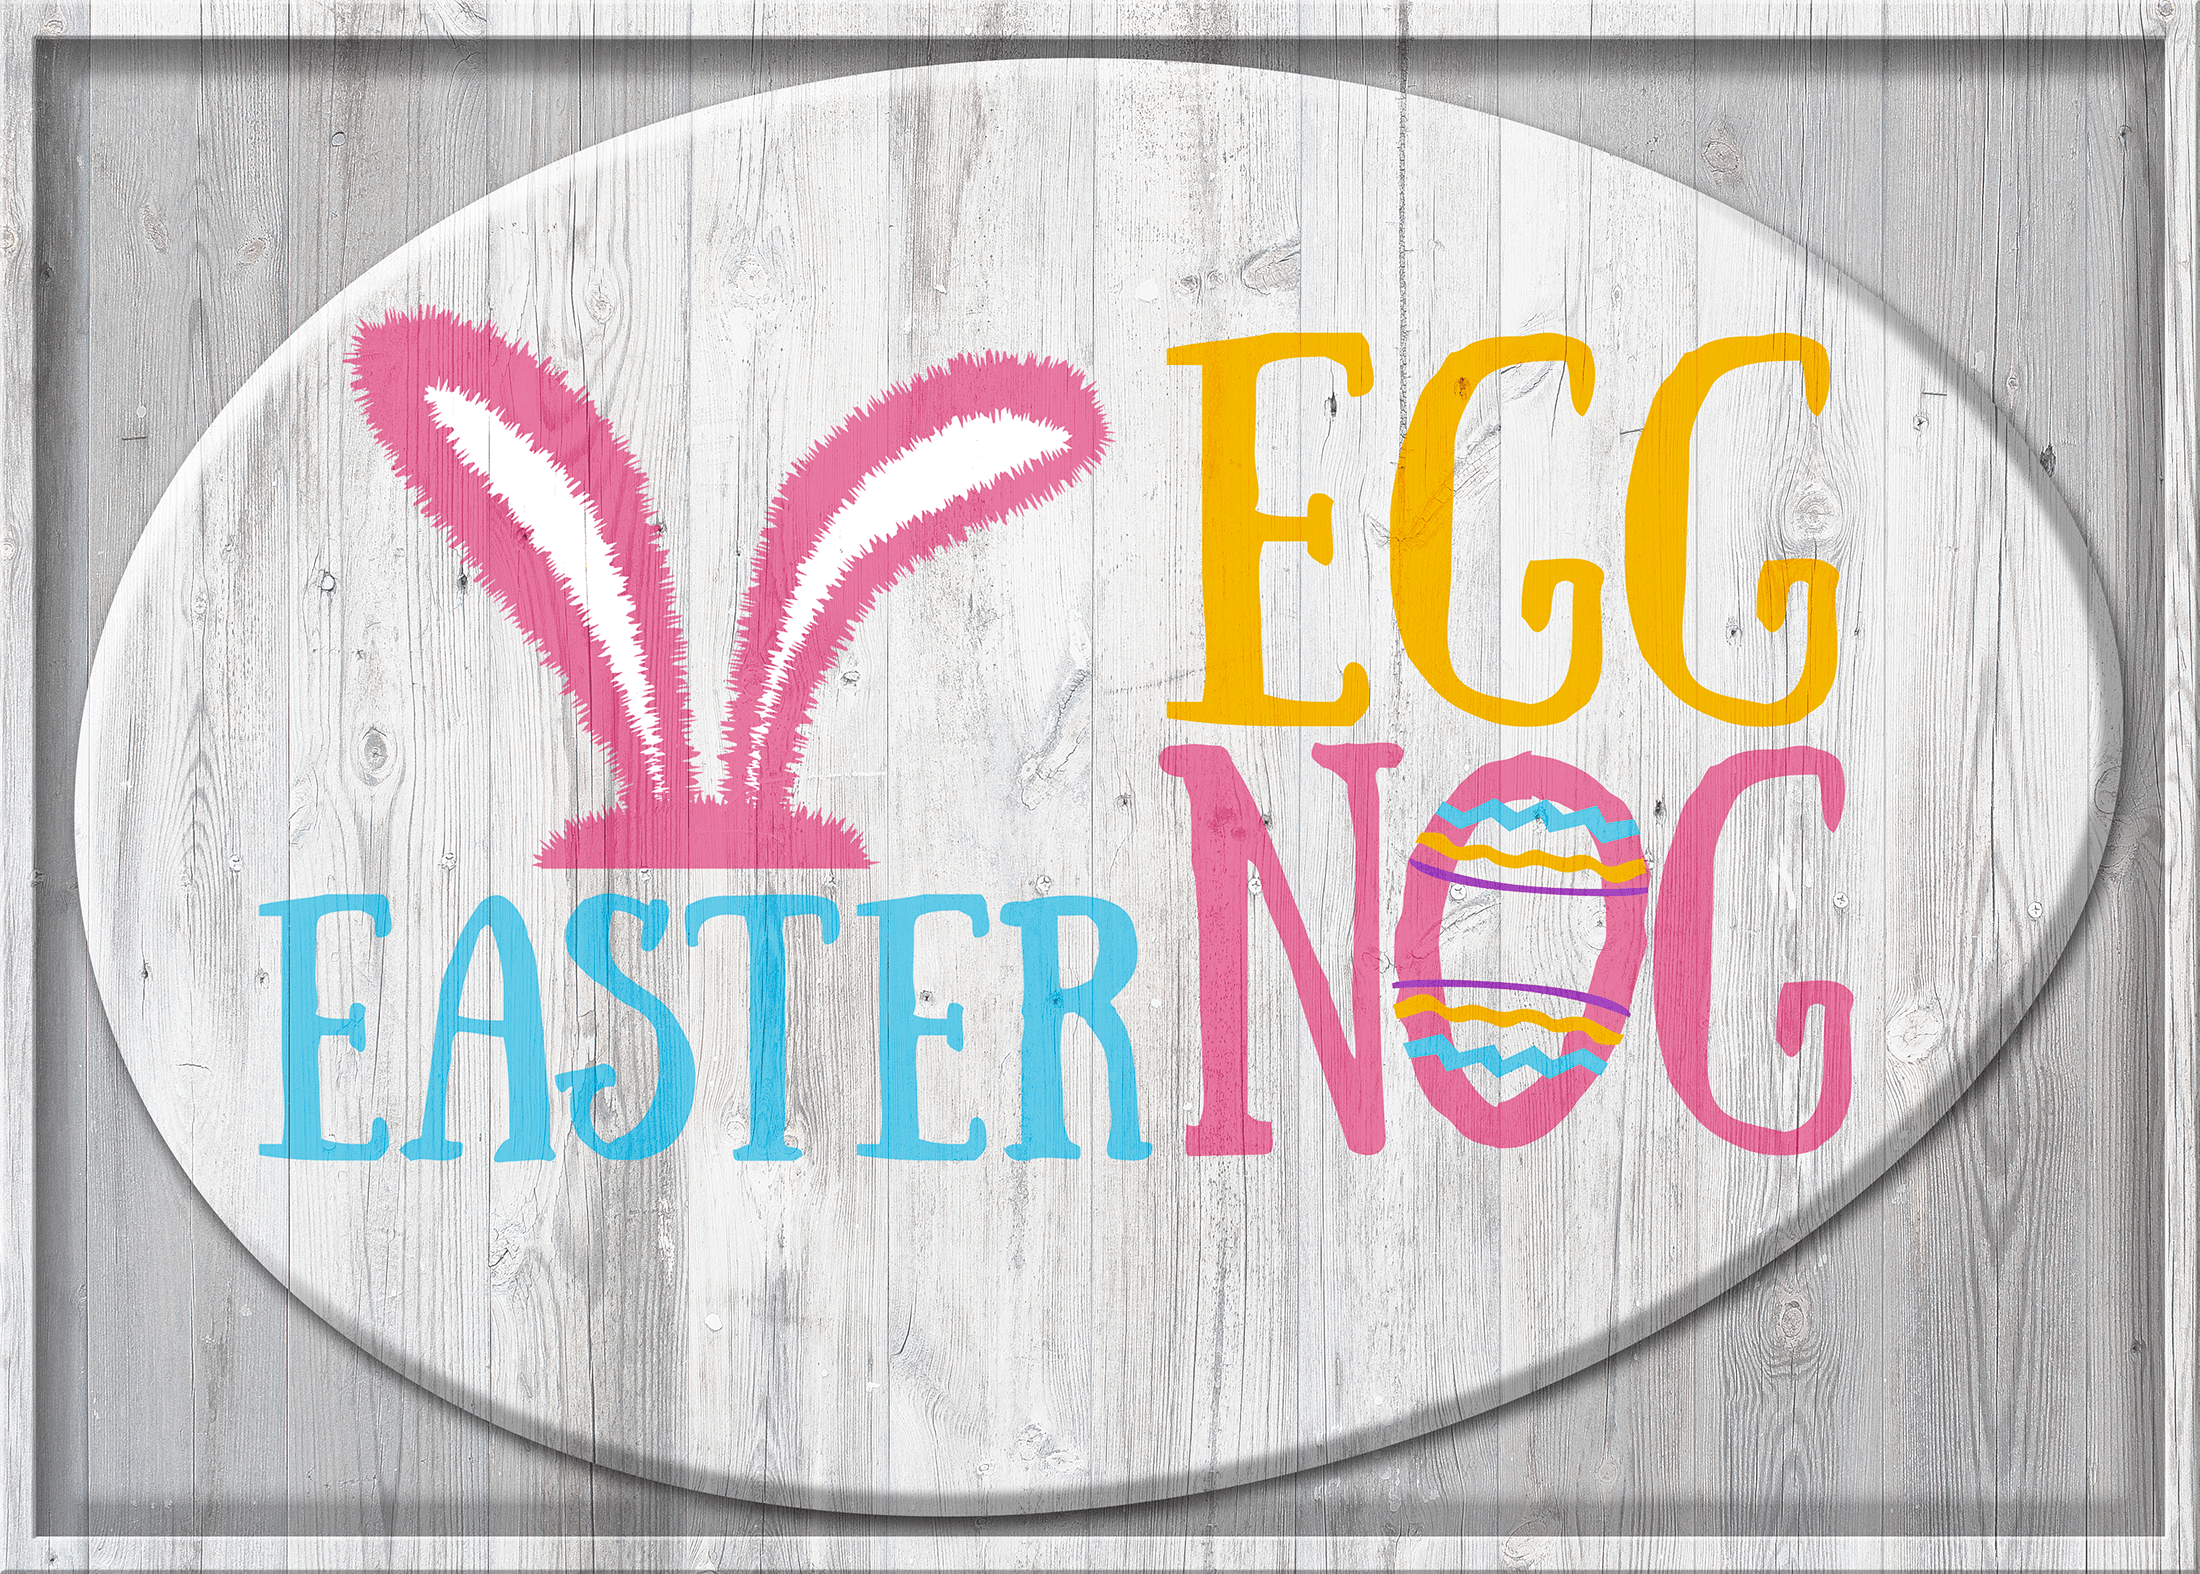 White Wood sign that says, "Easter egg Nog"